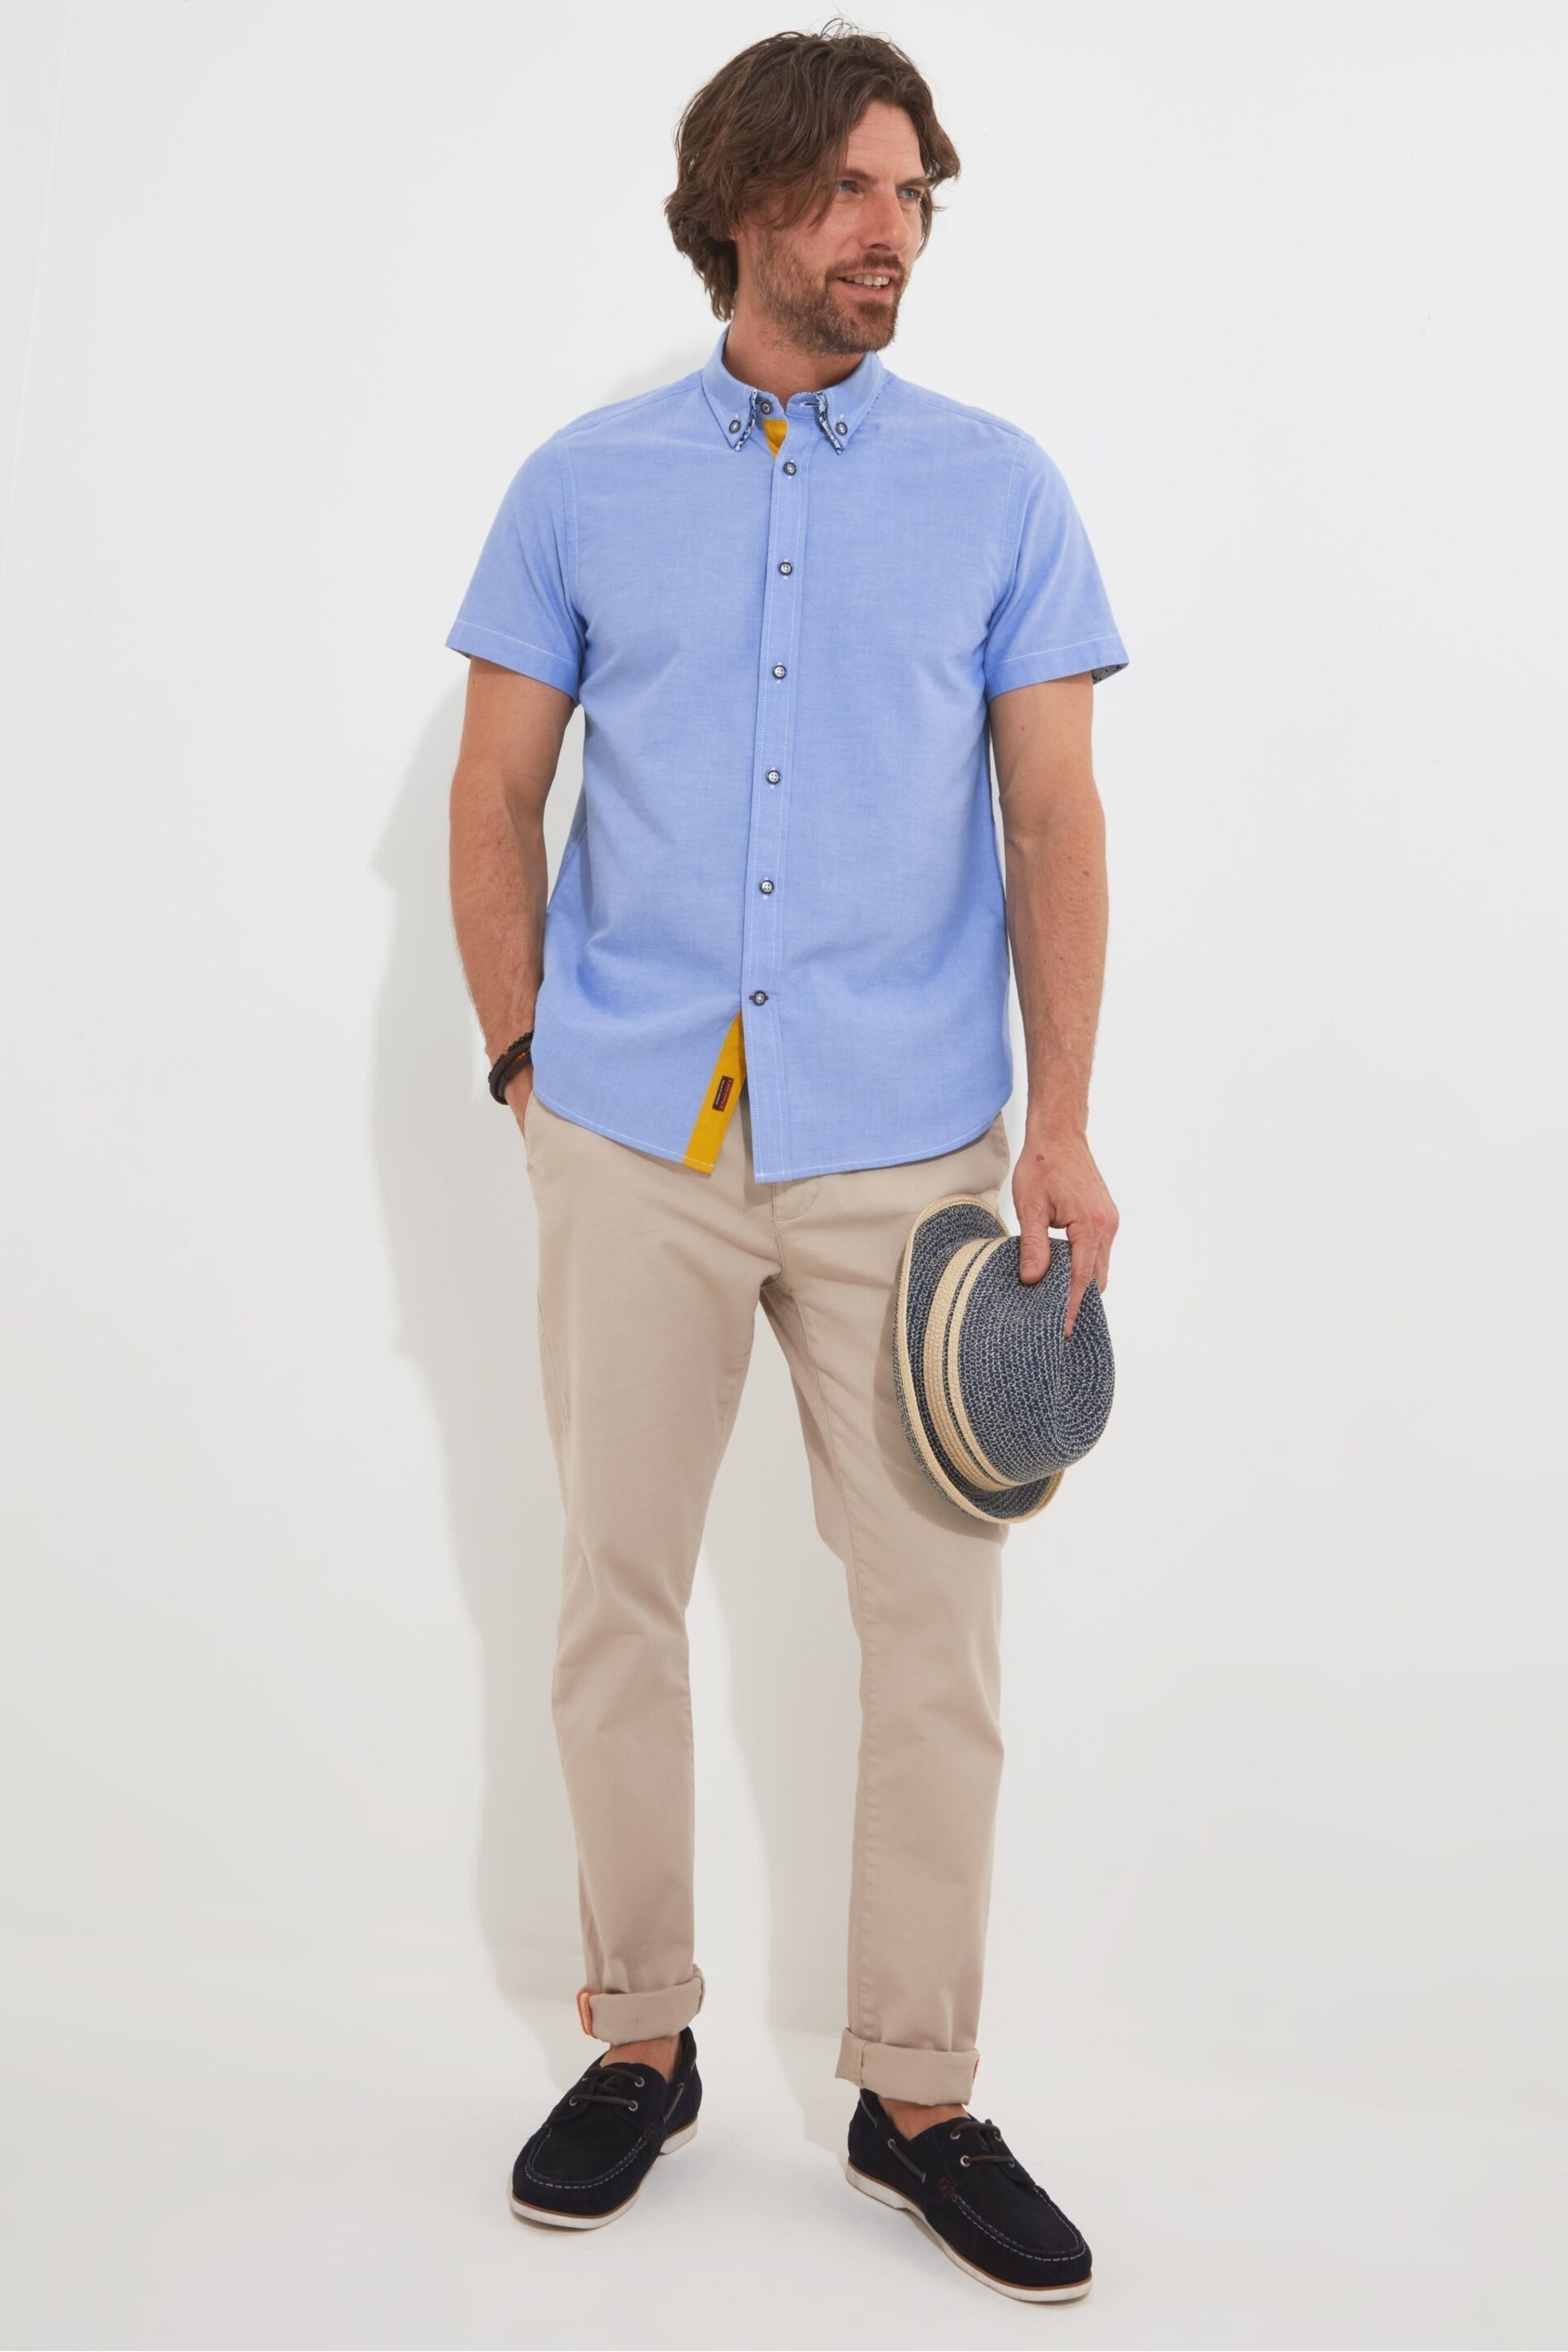 Joe Browns Blue Double Collar Short Sleeve Oxford Shirt - Image 6 of 7